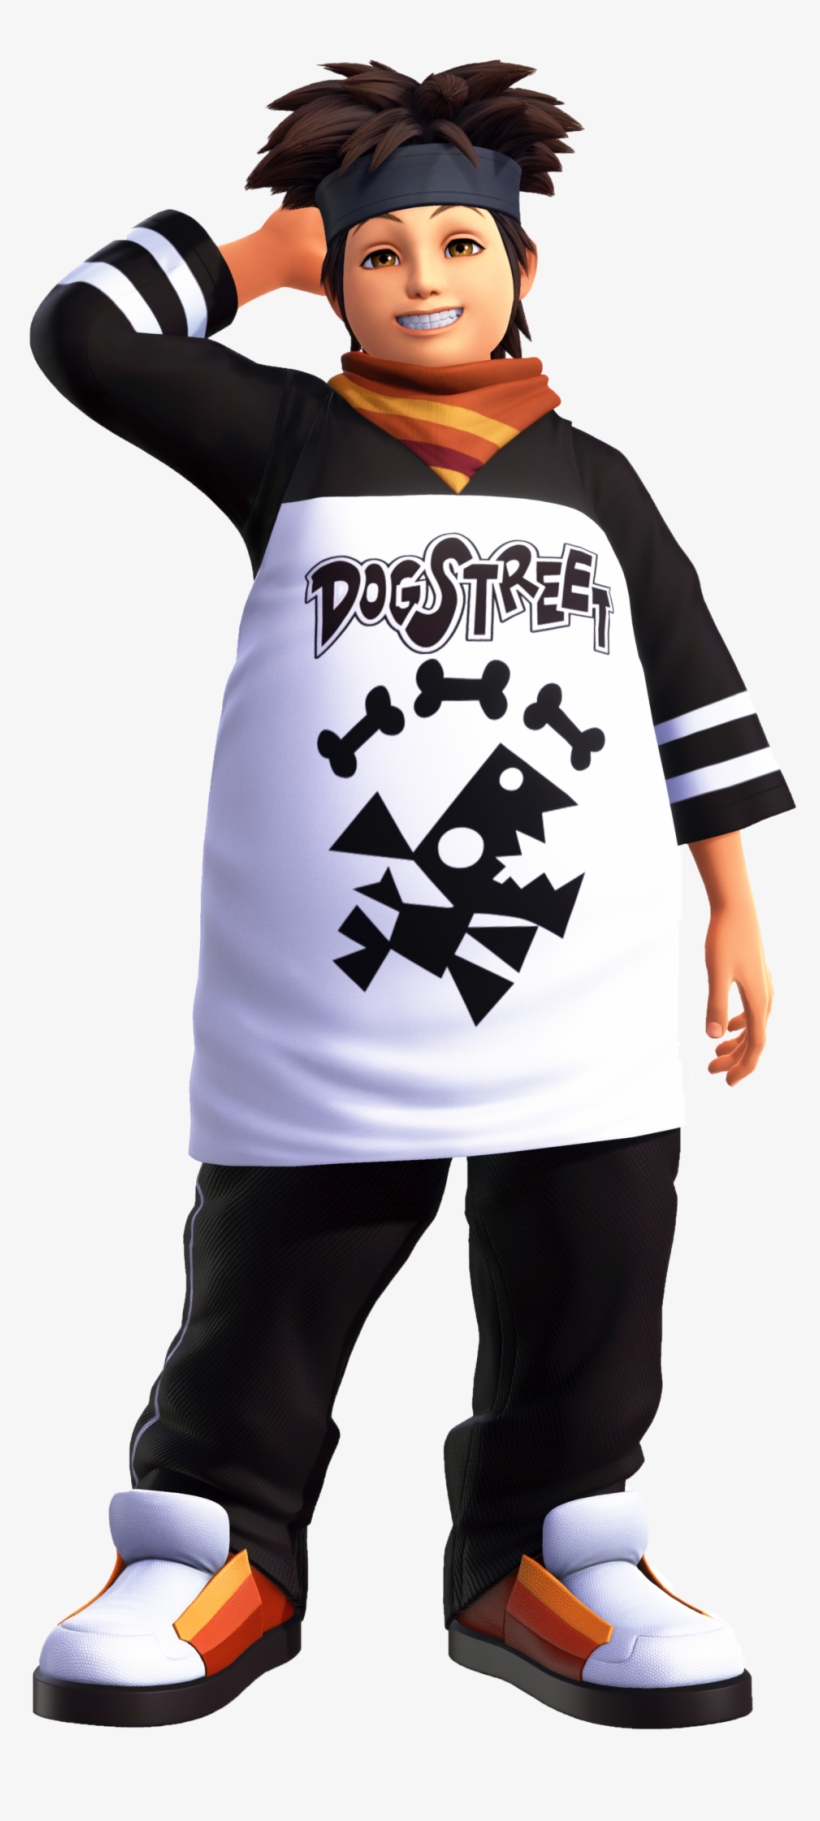 Pence - Kh3 - Dog Street Unisex T-shirt, transparent png #3729384